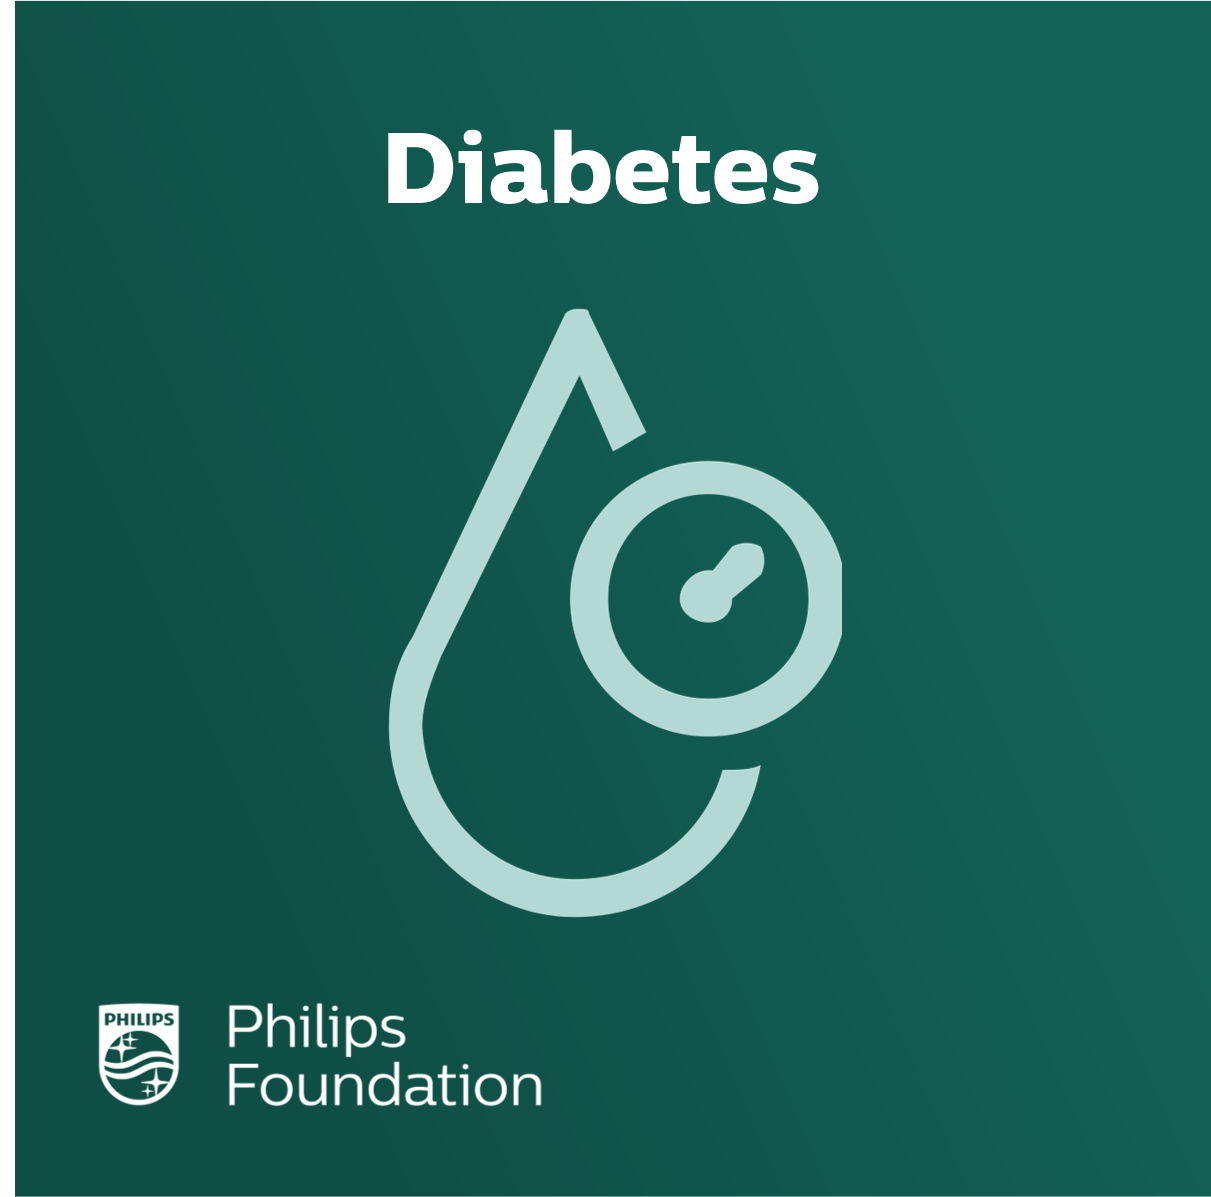 philips_foundation_diabetes_icon